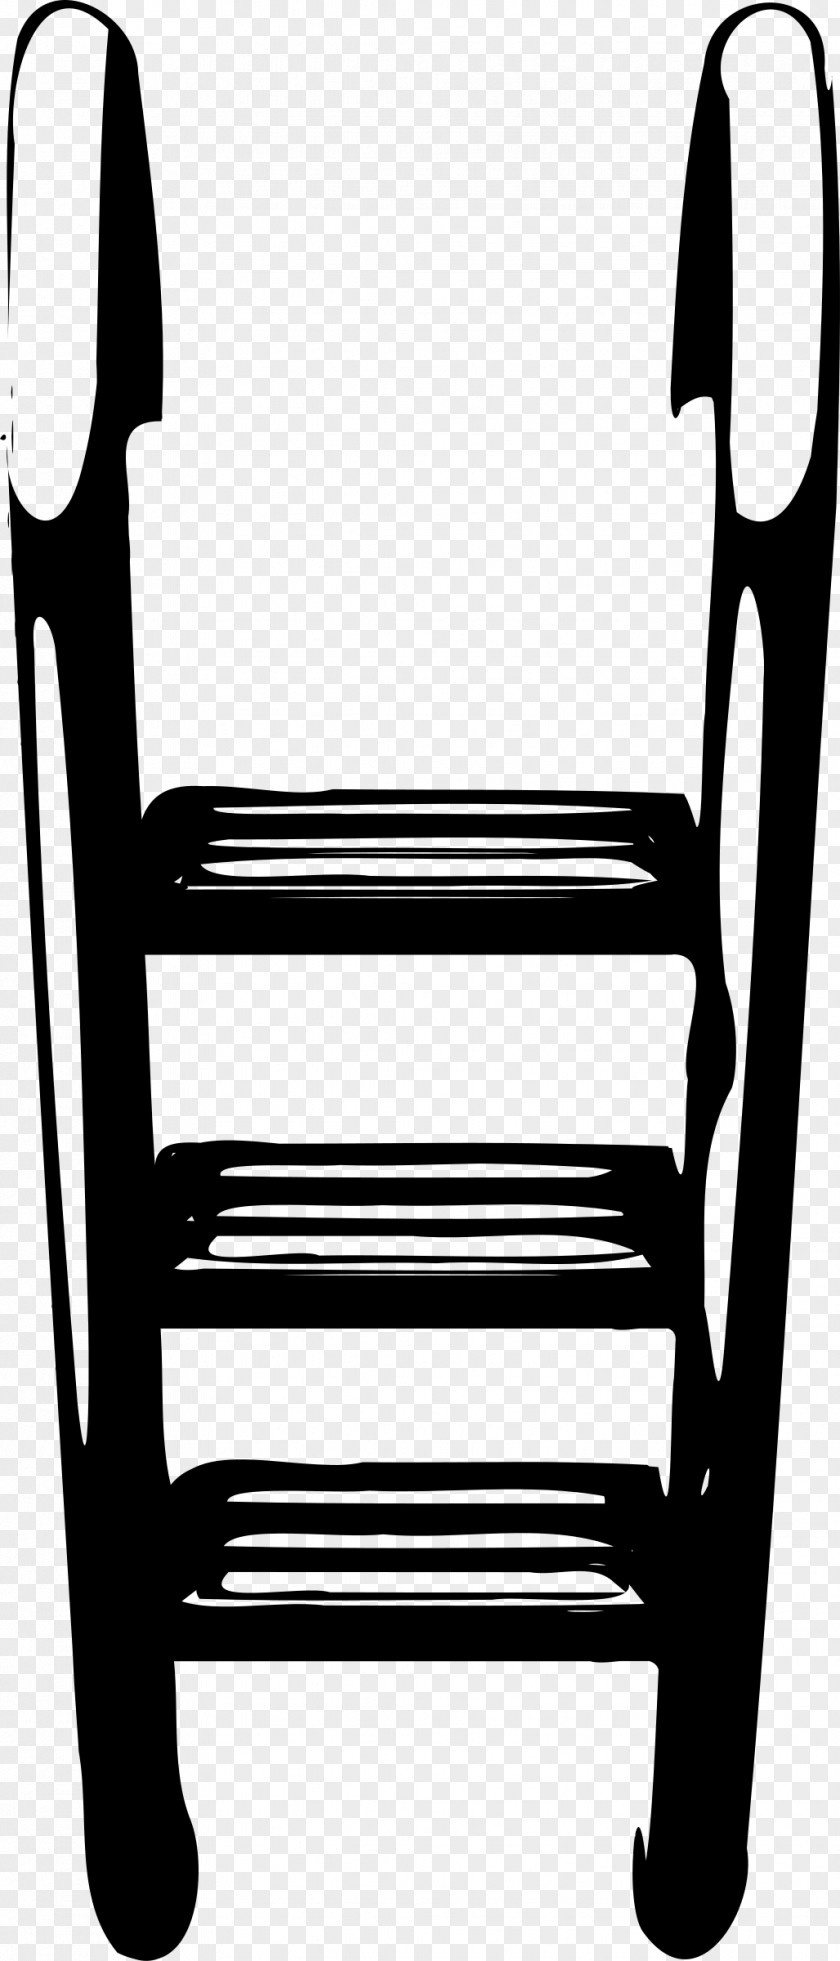 Ladders Ladder Clip Art PNG